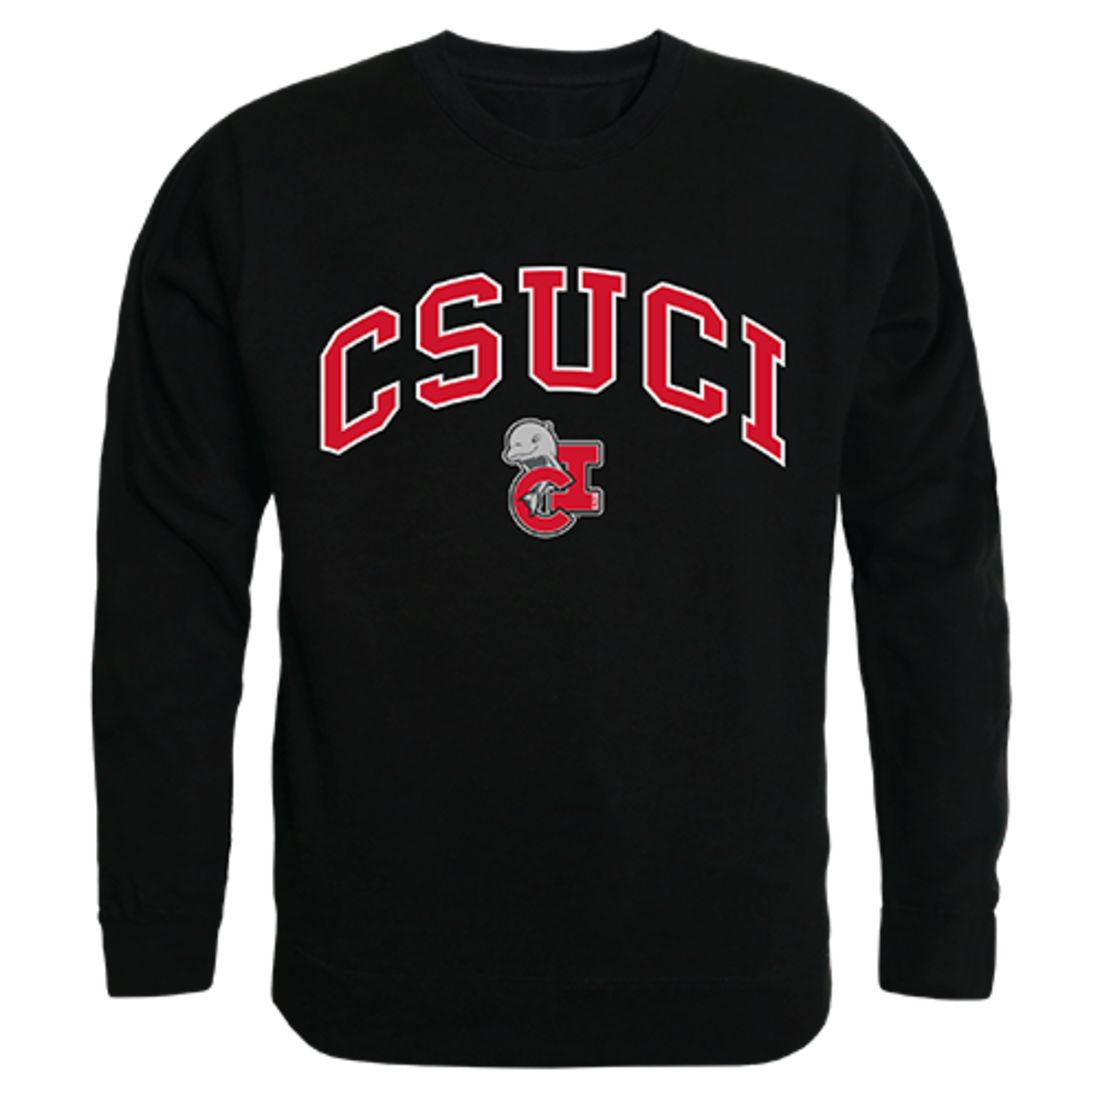 CSUCI CalIfornia State University Channel Islands Campus Crewneck Pullover Sweatshirt Sweater Black-Campus-Wardrobe